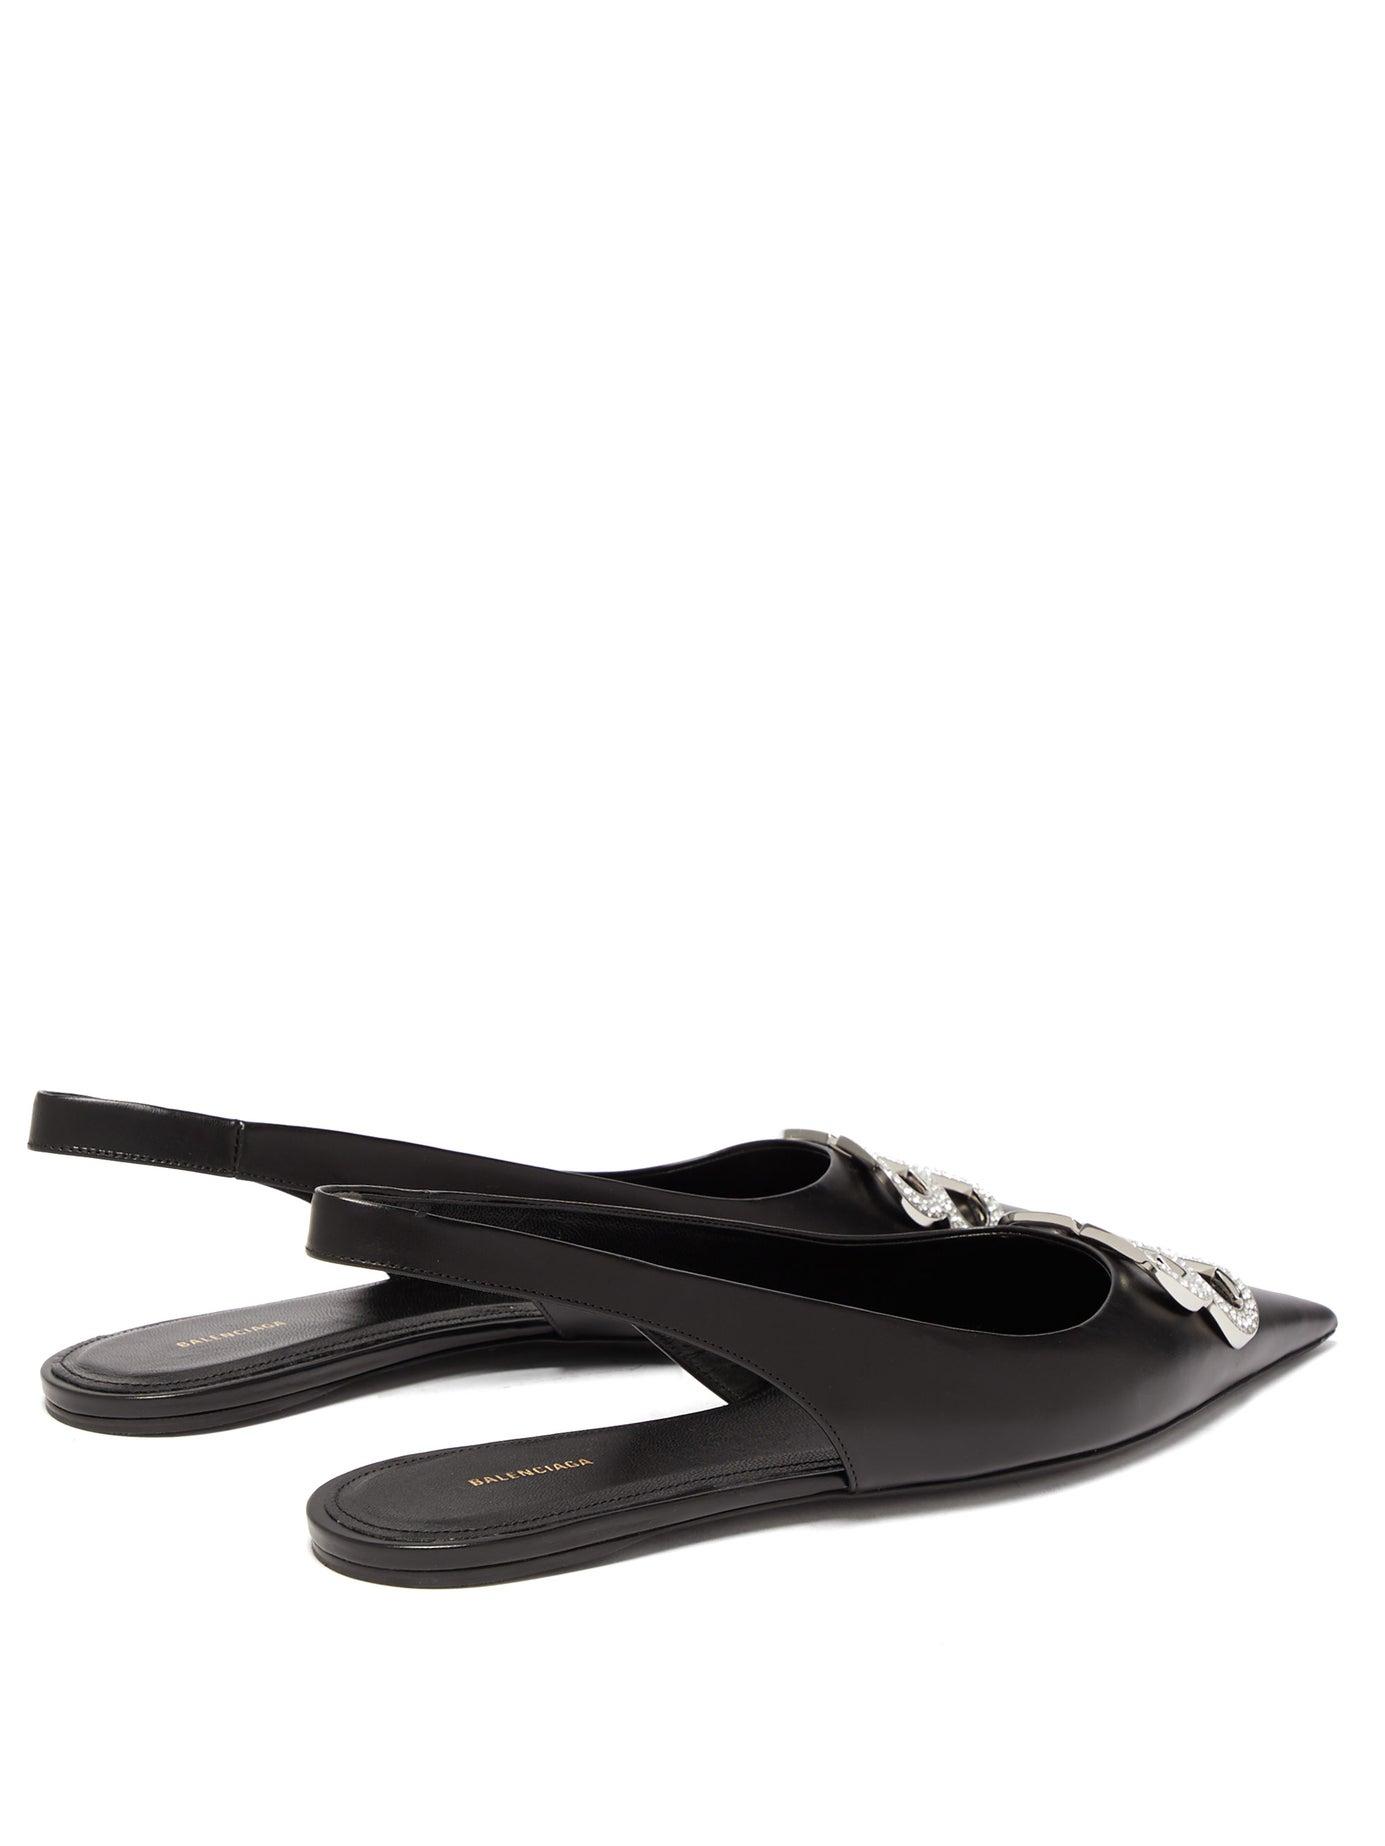 Balenciaga Patent Leather BB Knife Slingback Flats - Size 7 / 37